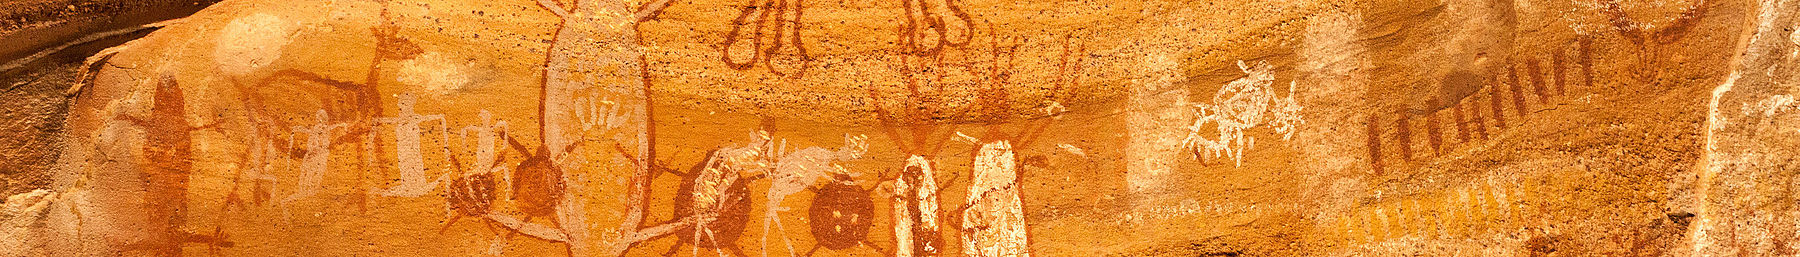 Serra da Capivara banner Petroglyphs.jpg